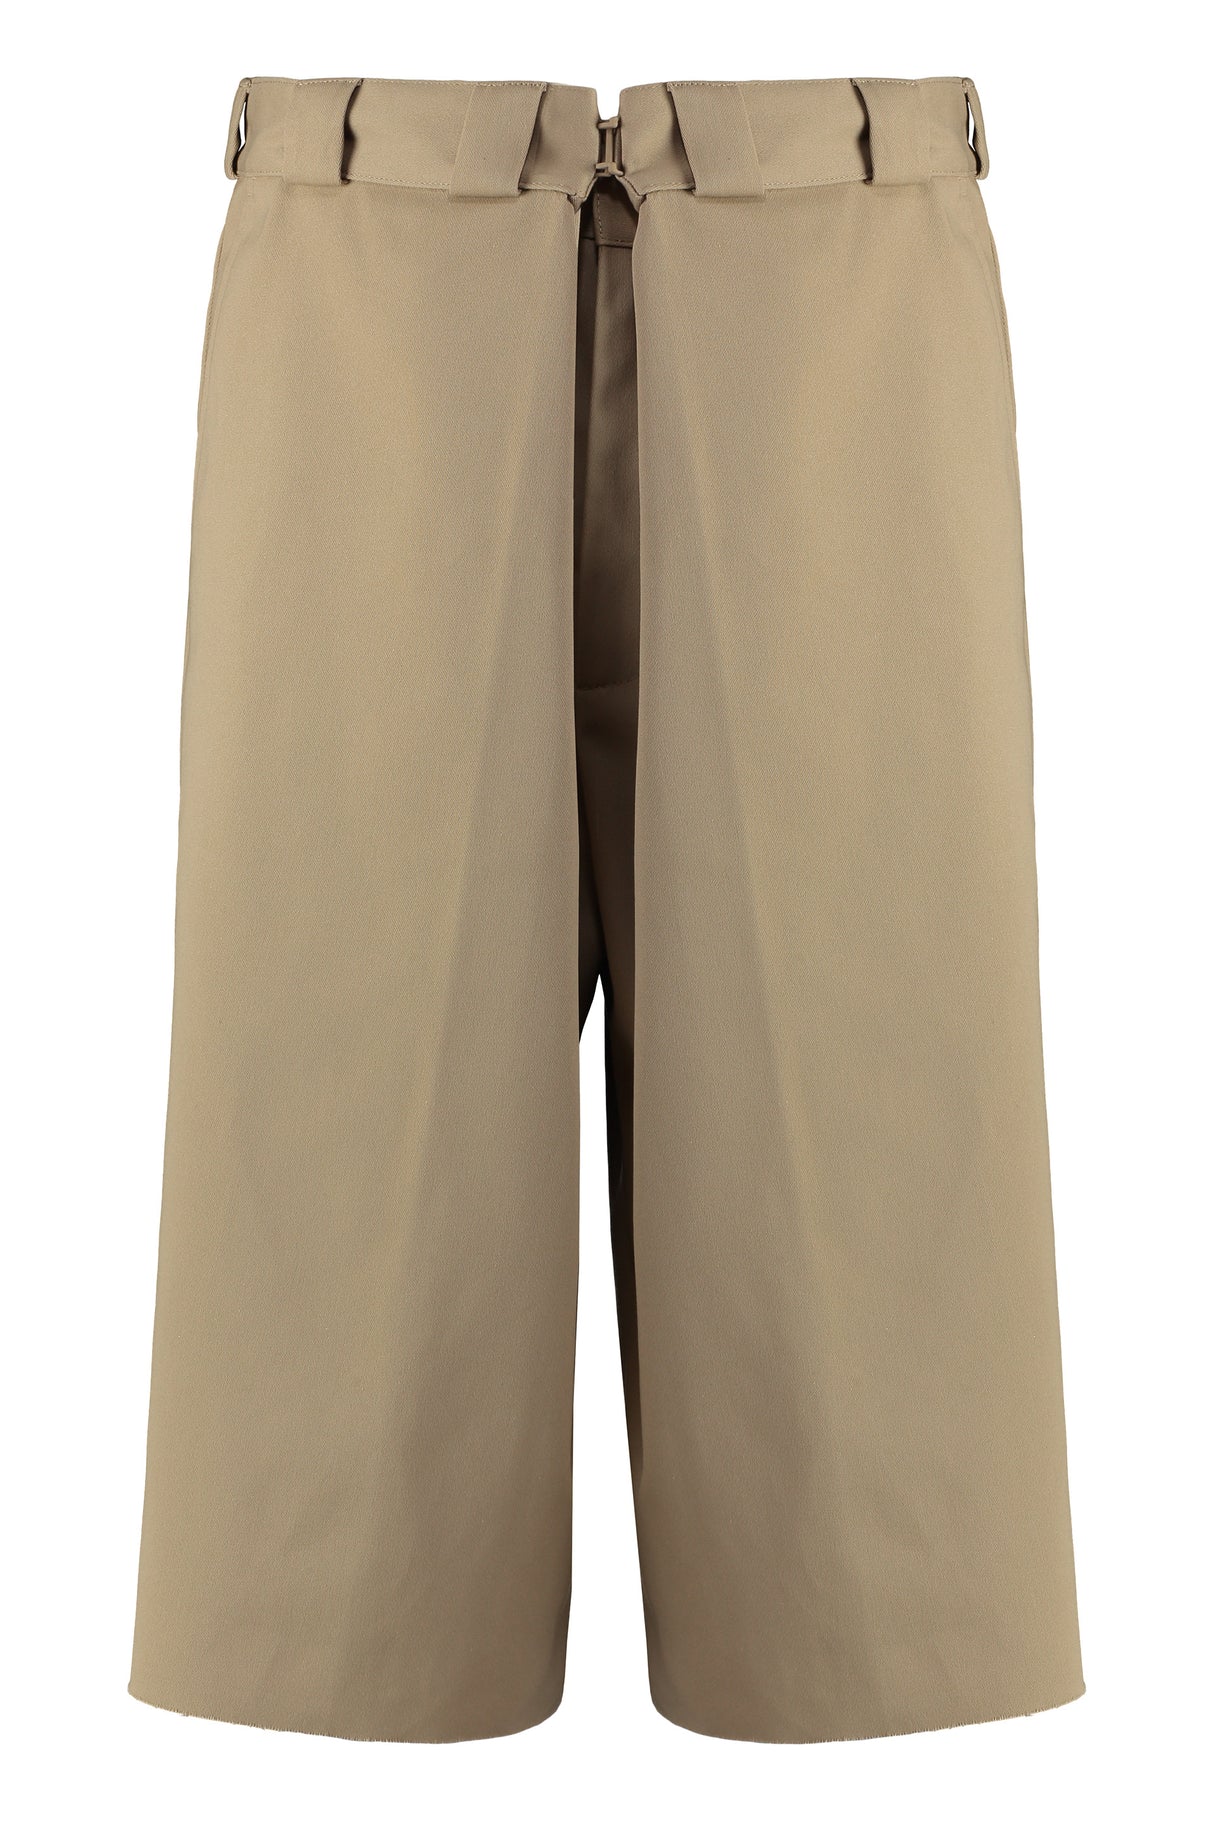 GIVENCHY Tan Blend Cotton Bermuda Shorts for Men - SS24 Collection